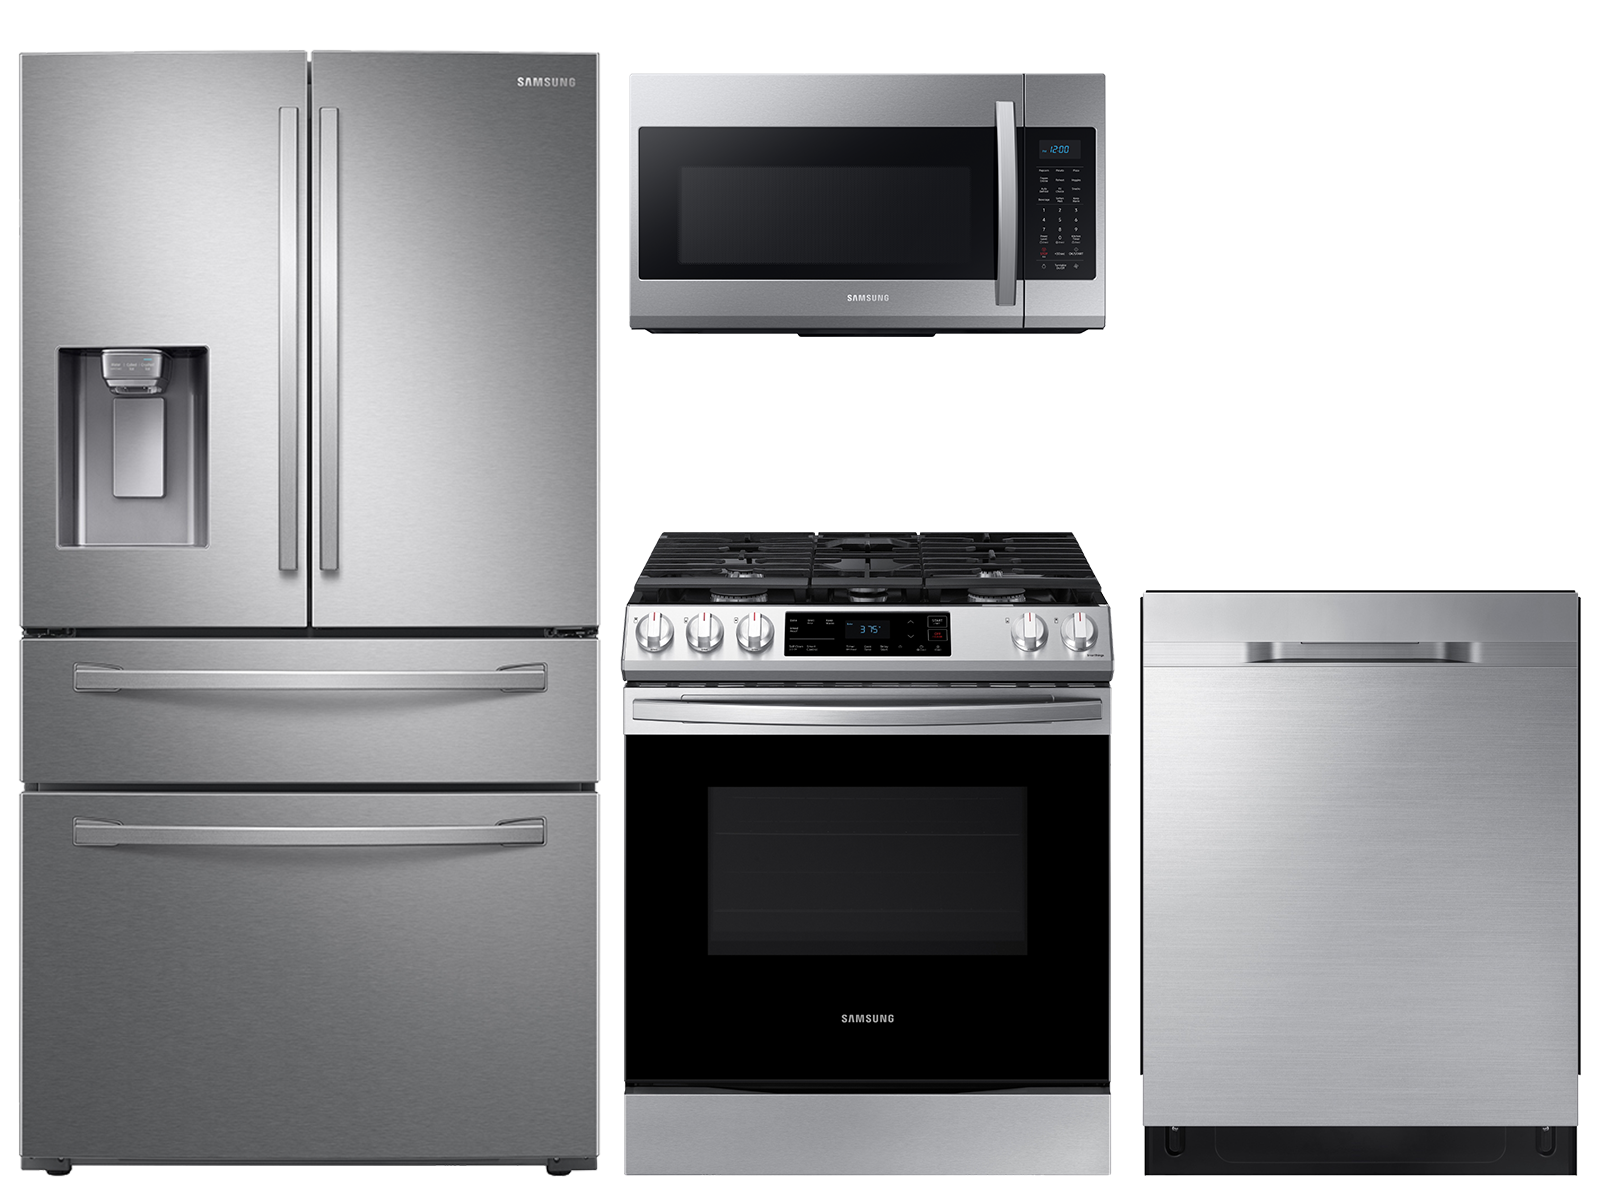 Samsung 23 cu. ft. counter depth 4-door refrigerator, 6.0 cu. ft. gas range, microwave and 48 dBA dishwasher package(BNDL-1613161935568)